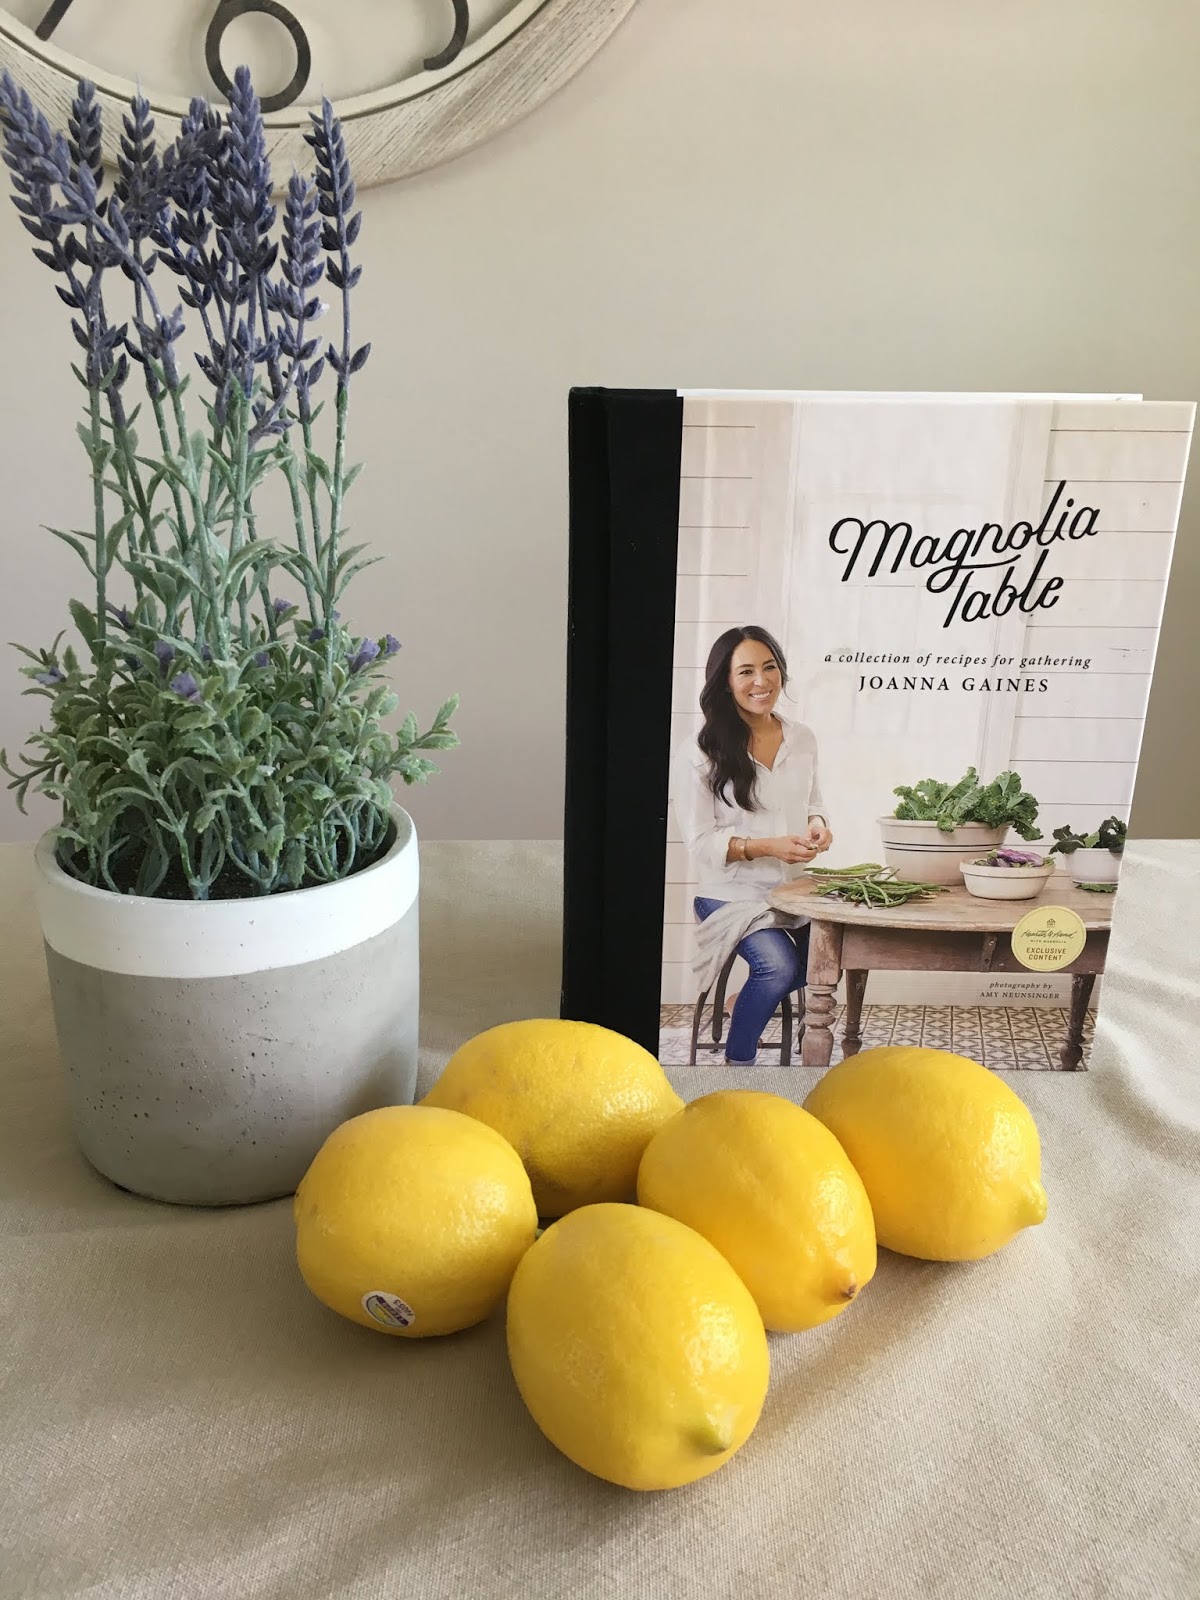 Joanna Gaines' lemon poppyseed bread recipe from Magnolia Table